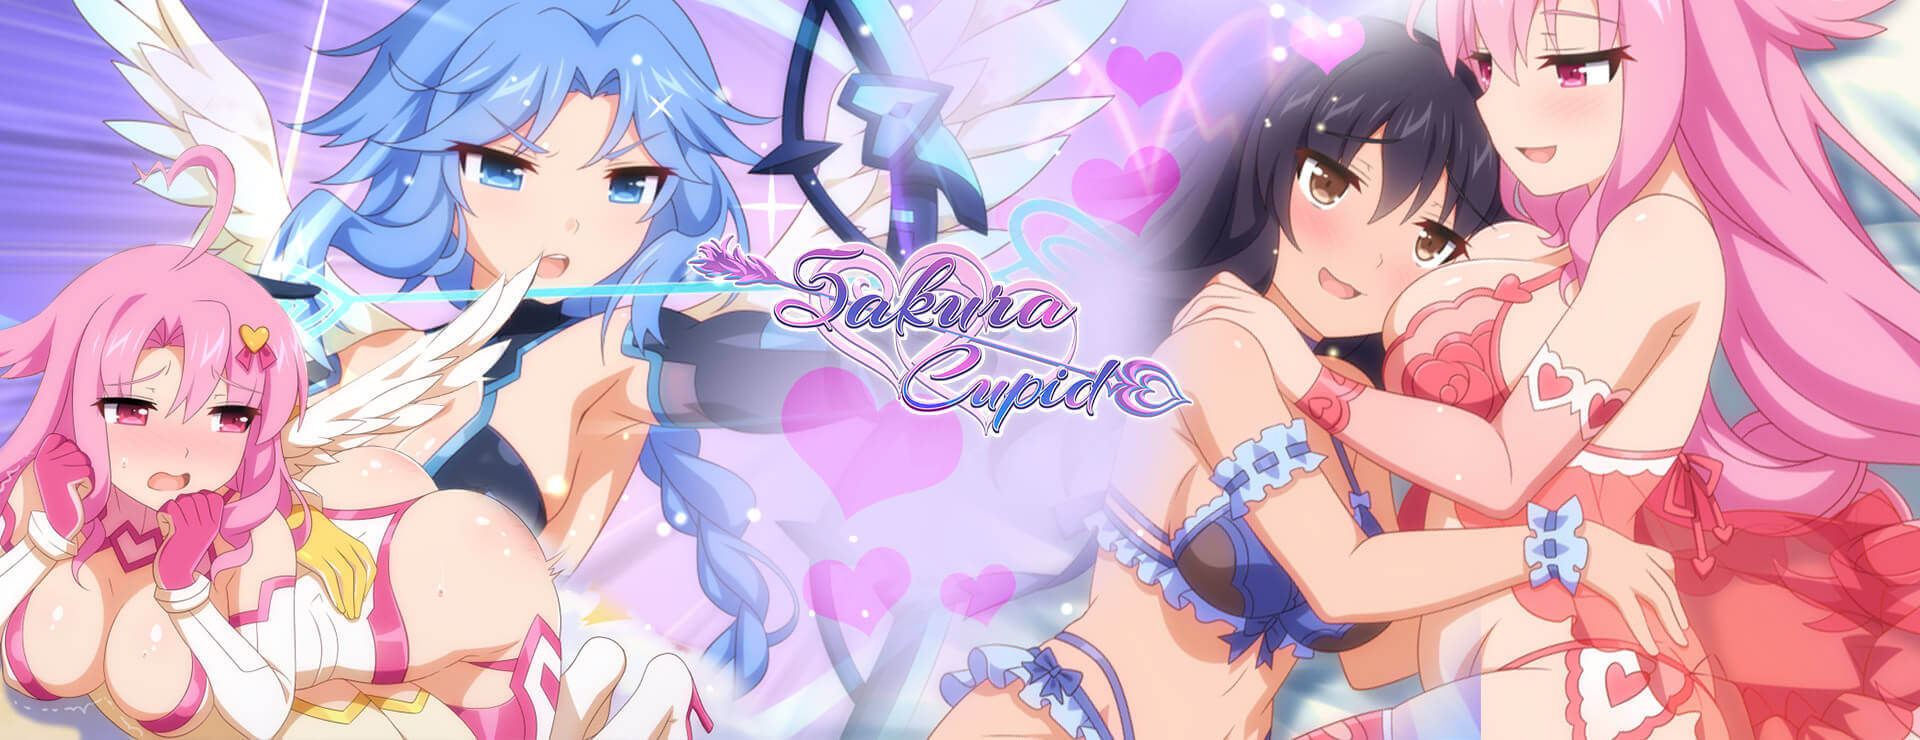 Sakura Cupid - Visual Novel Game